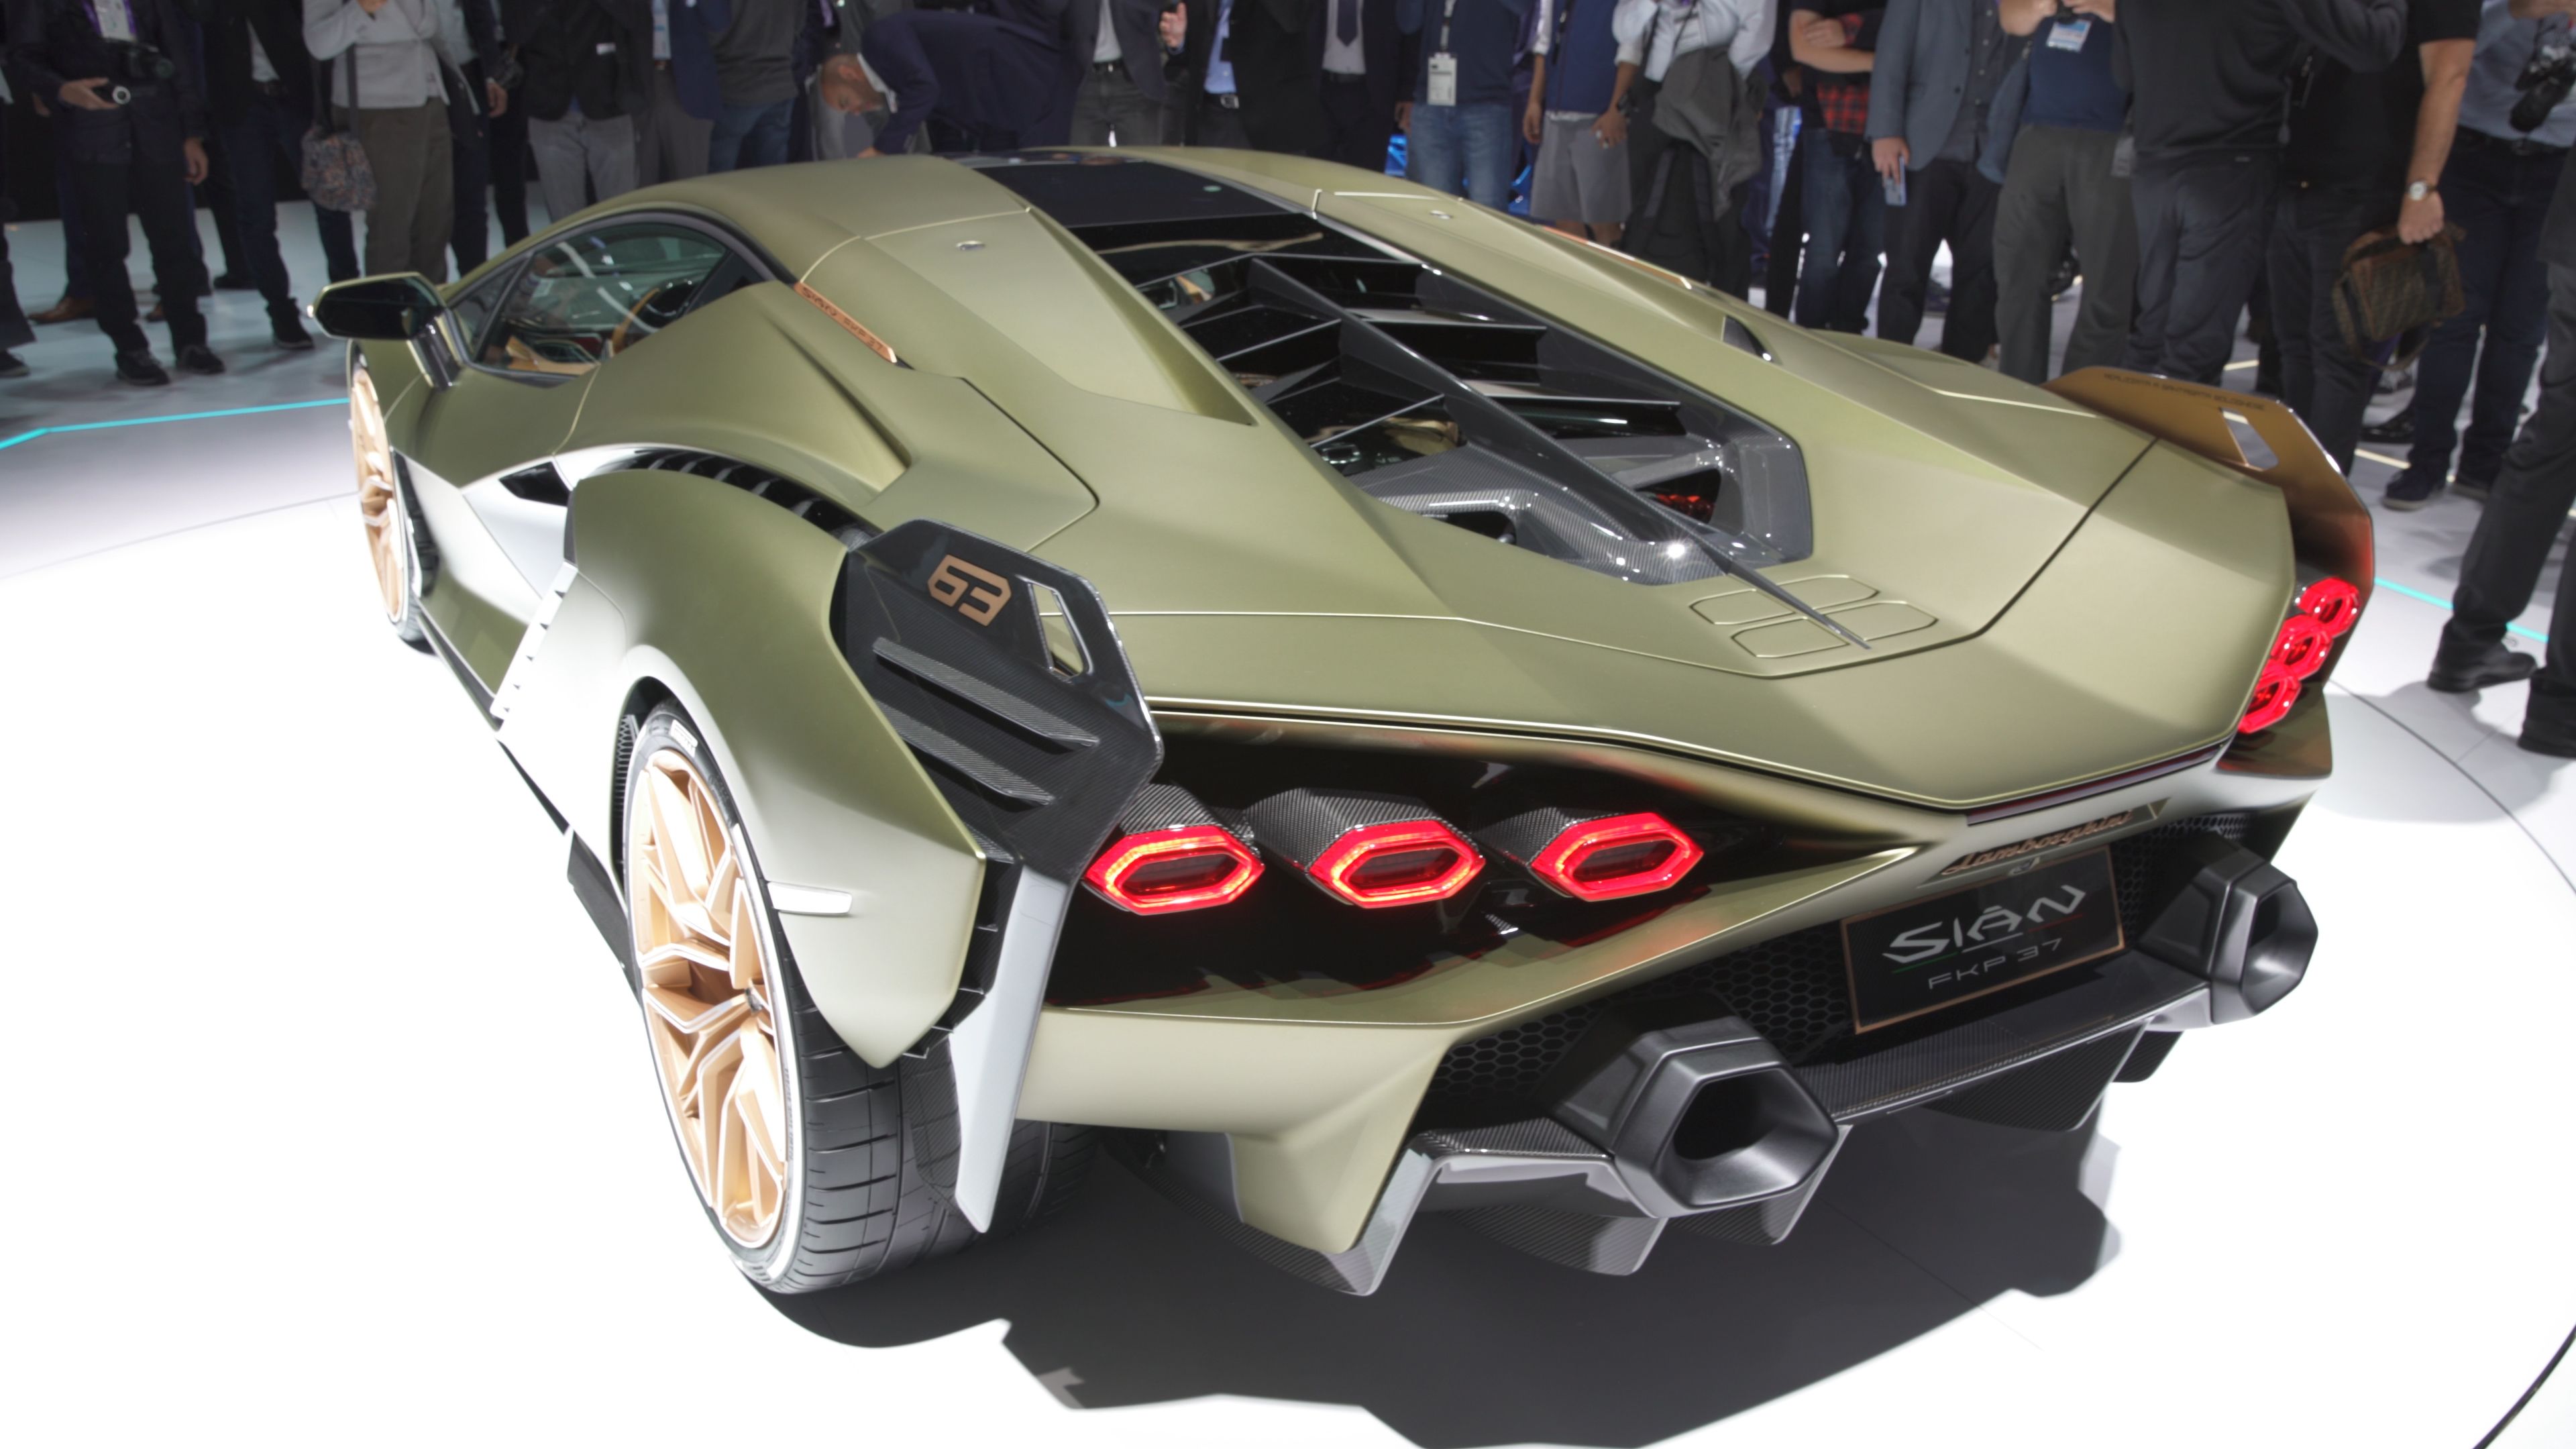 The Lamborghini Terzo Millennio concept is a lightning strike from